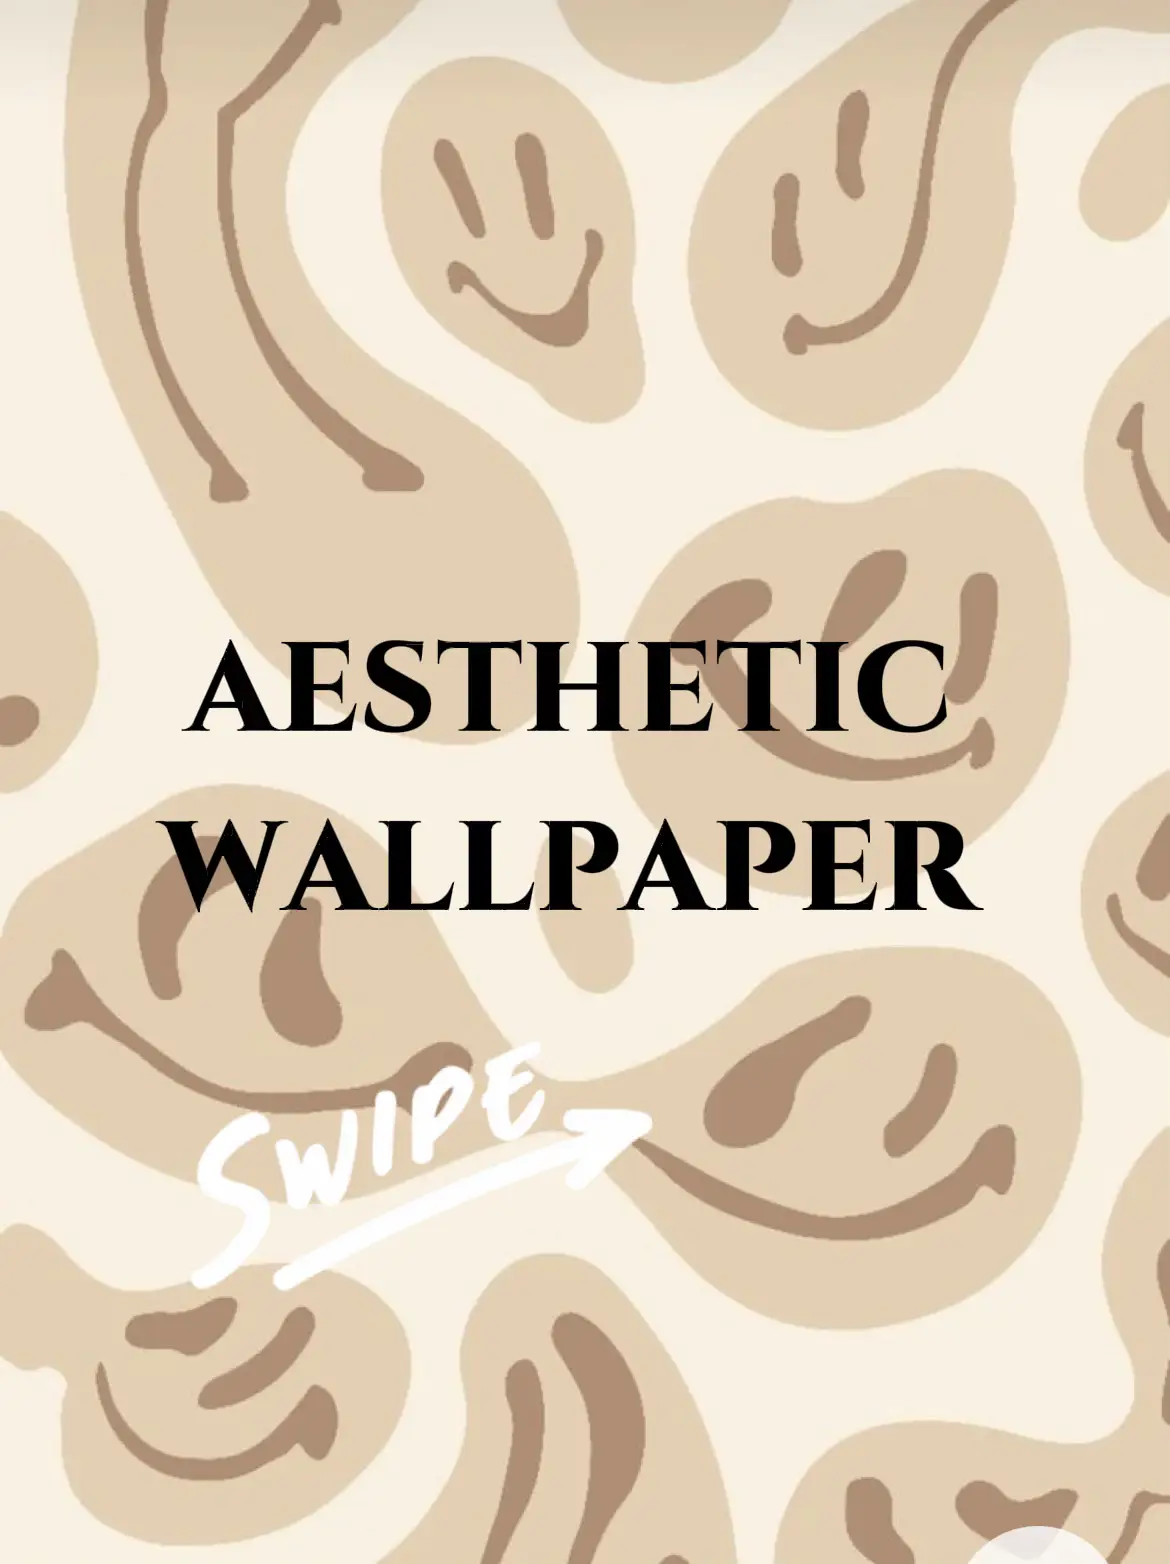 aesthetic wallpaper collage - Lemon8 Search